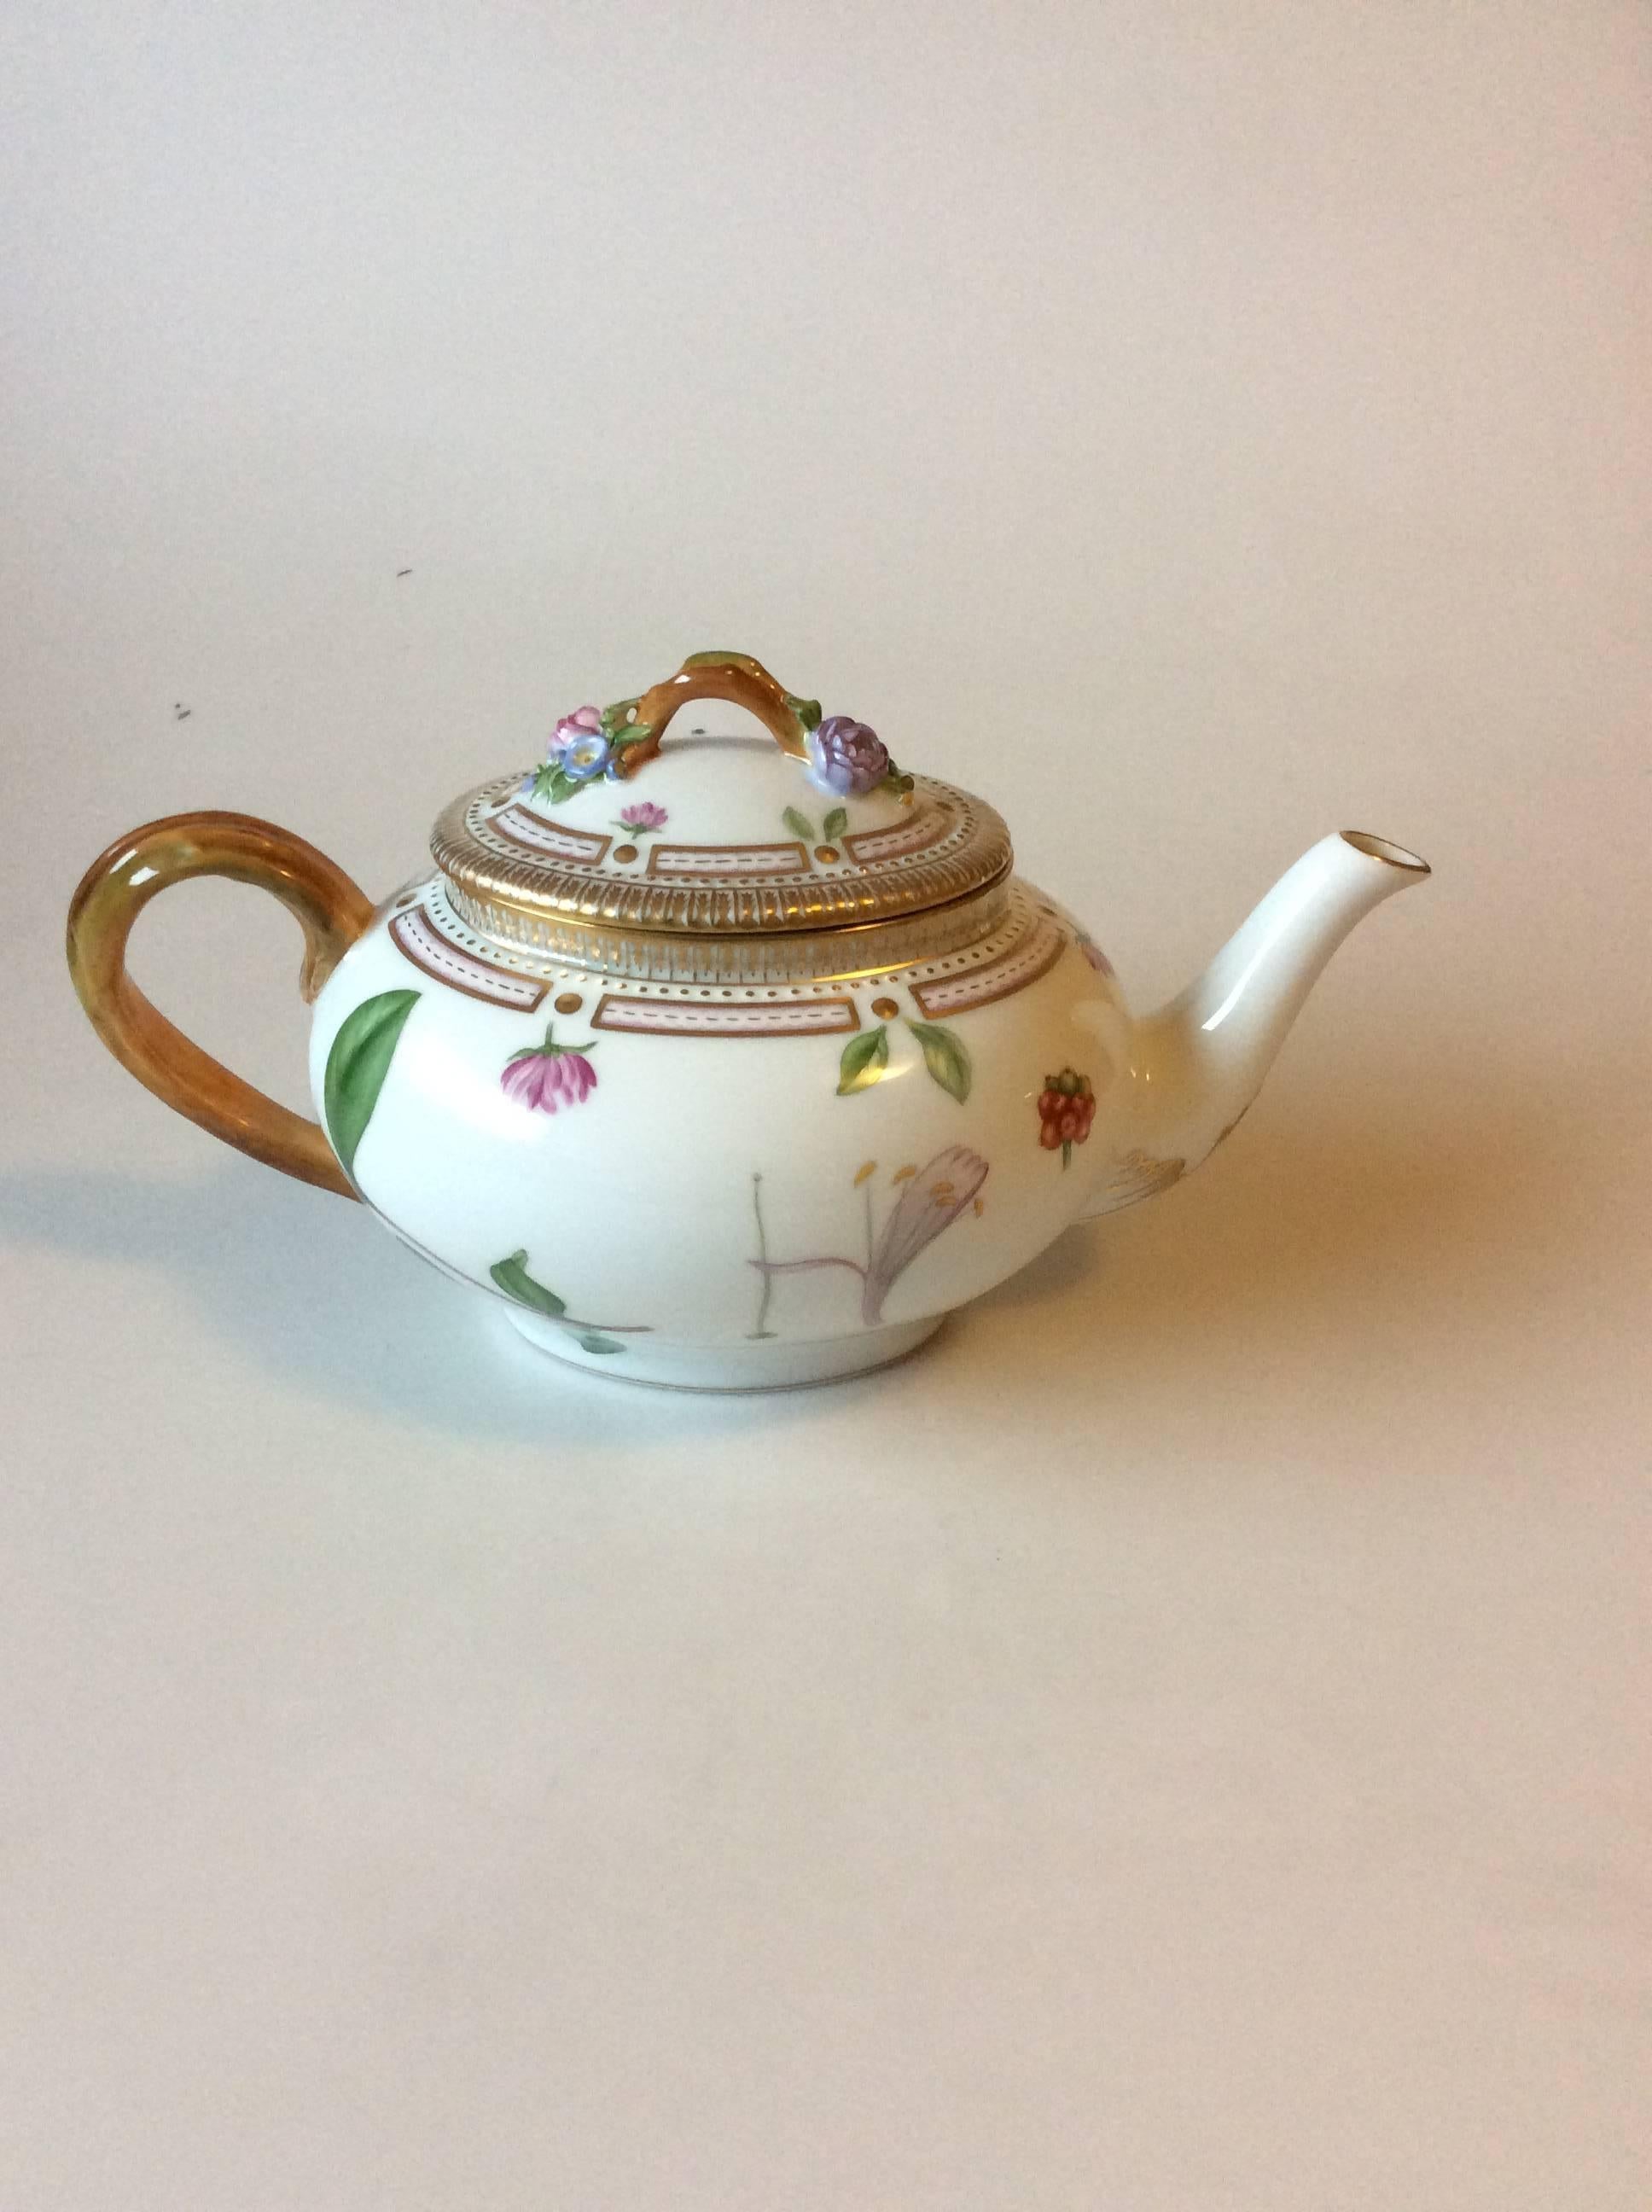 Royal Copenhagen Flora Danica tea pot with lid no. 3631 / 143.

Measures: 6 1/4